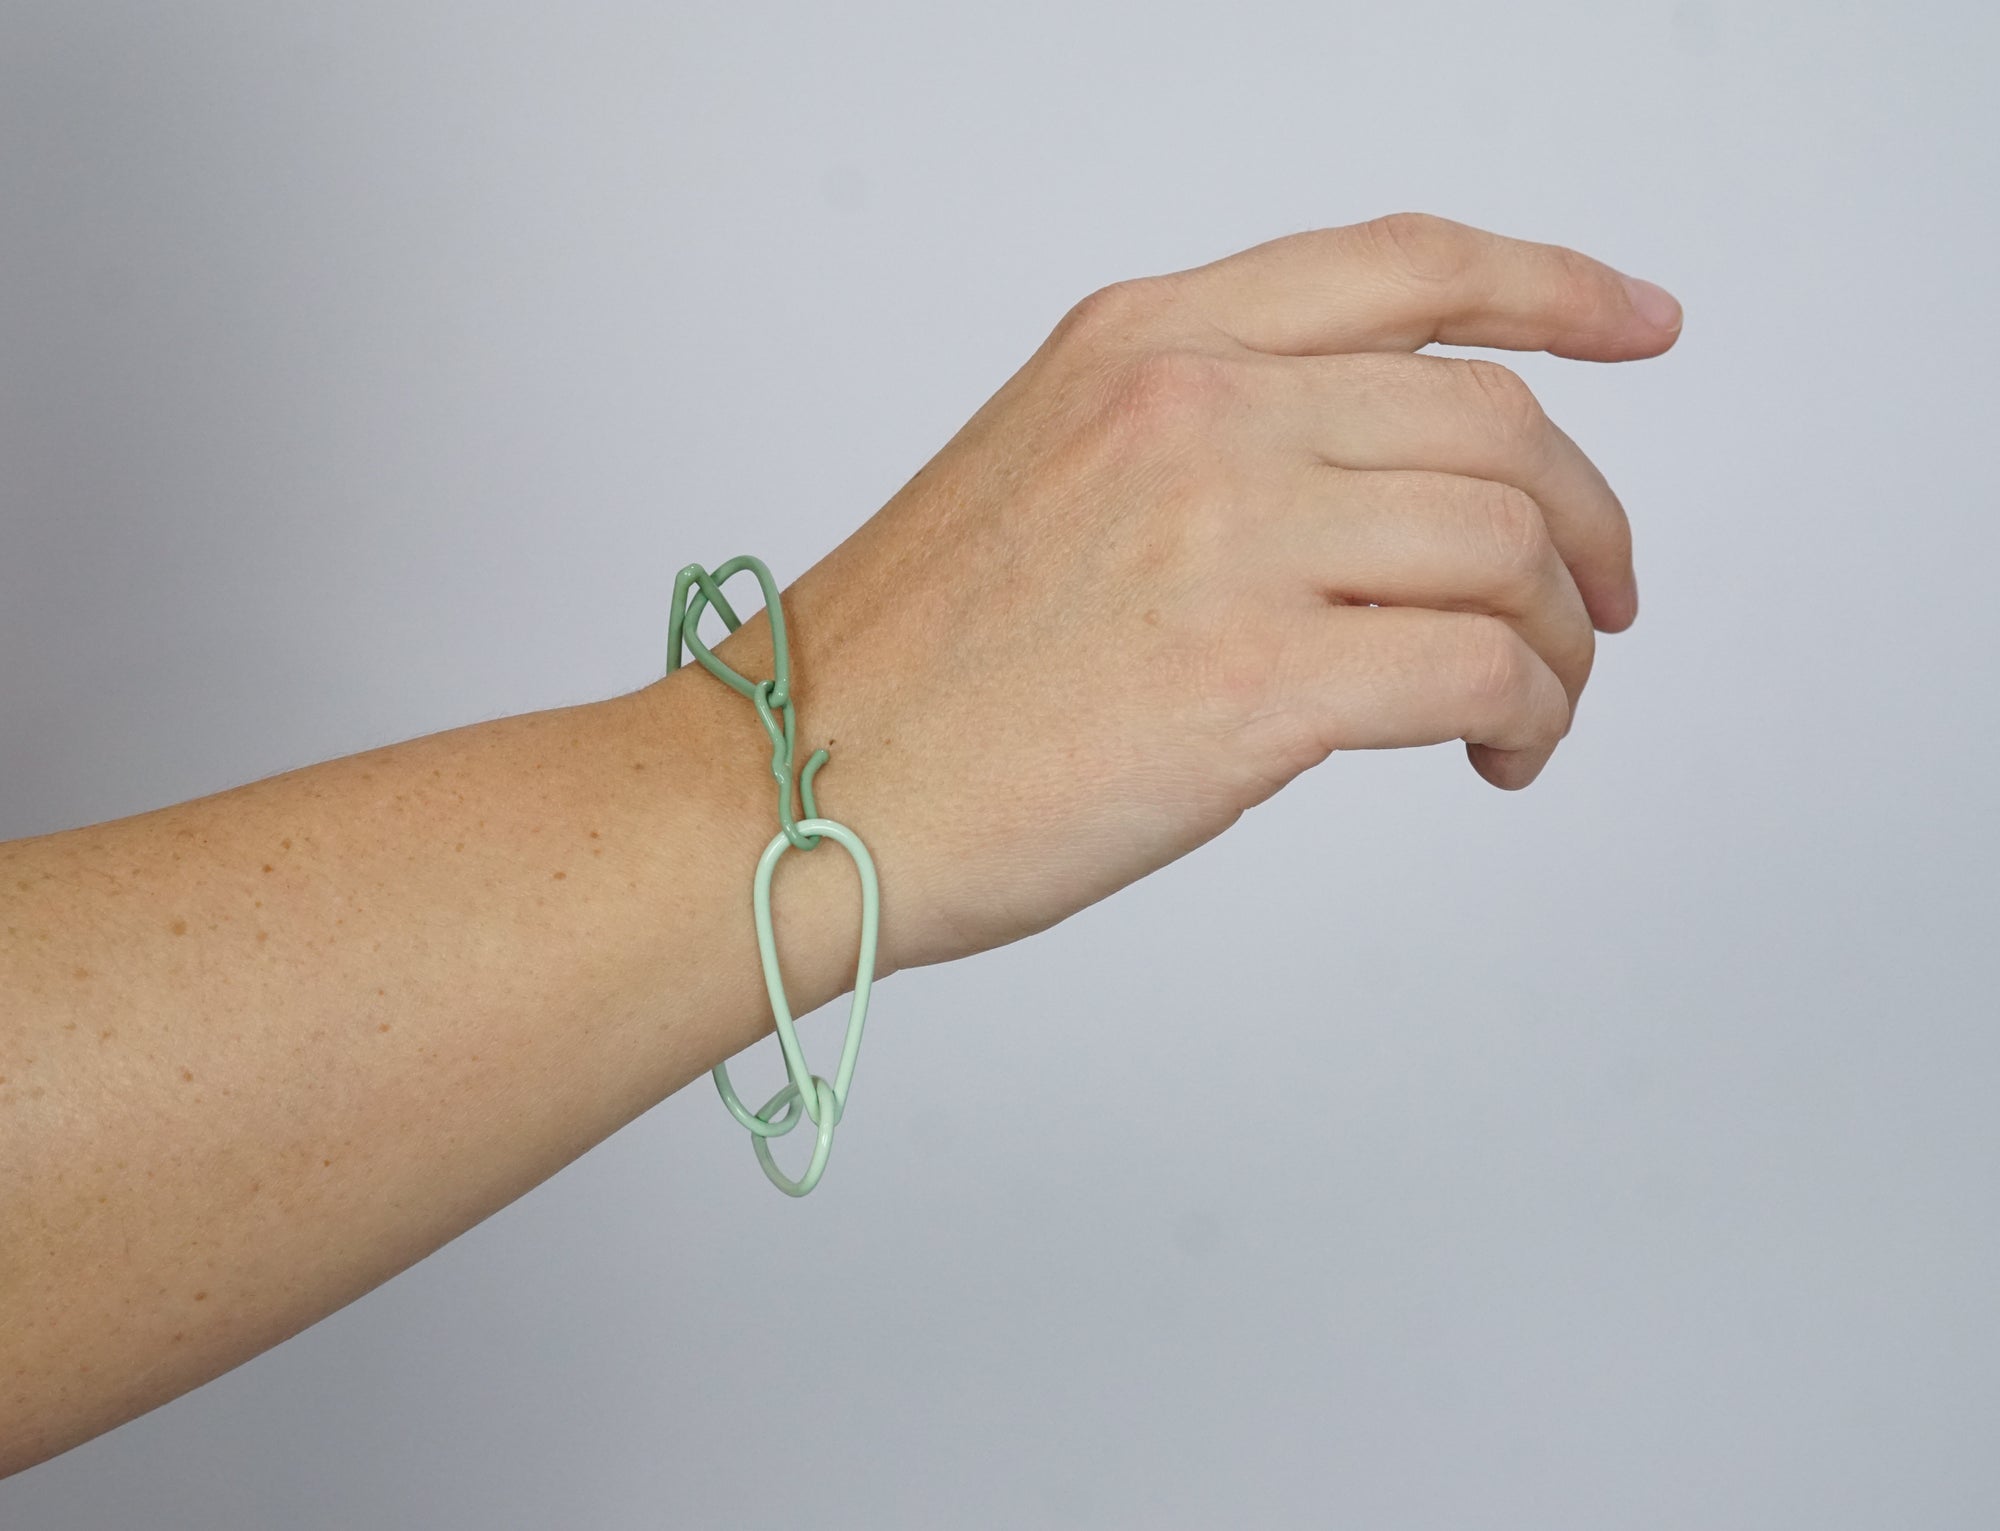 Modular Bracelet in Soft Mint and Pale Green - medium